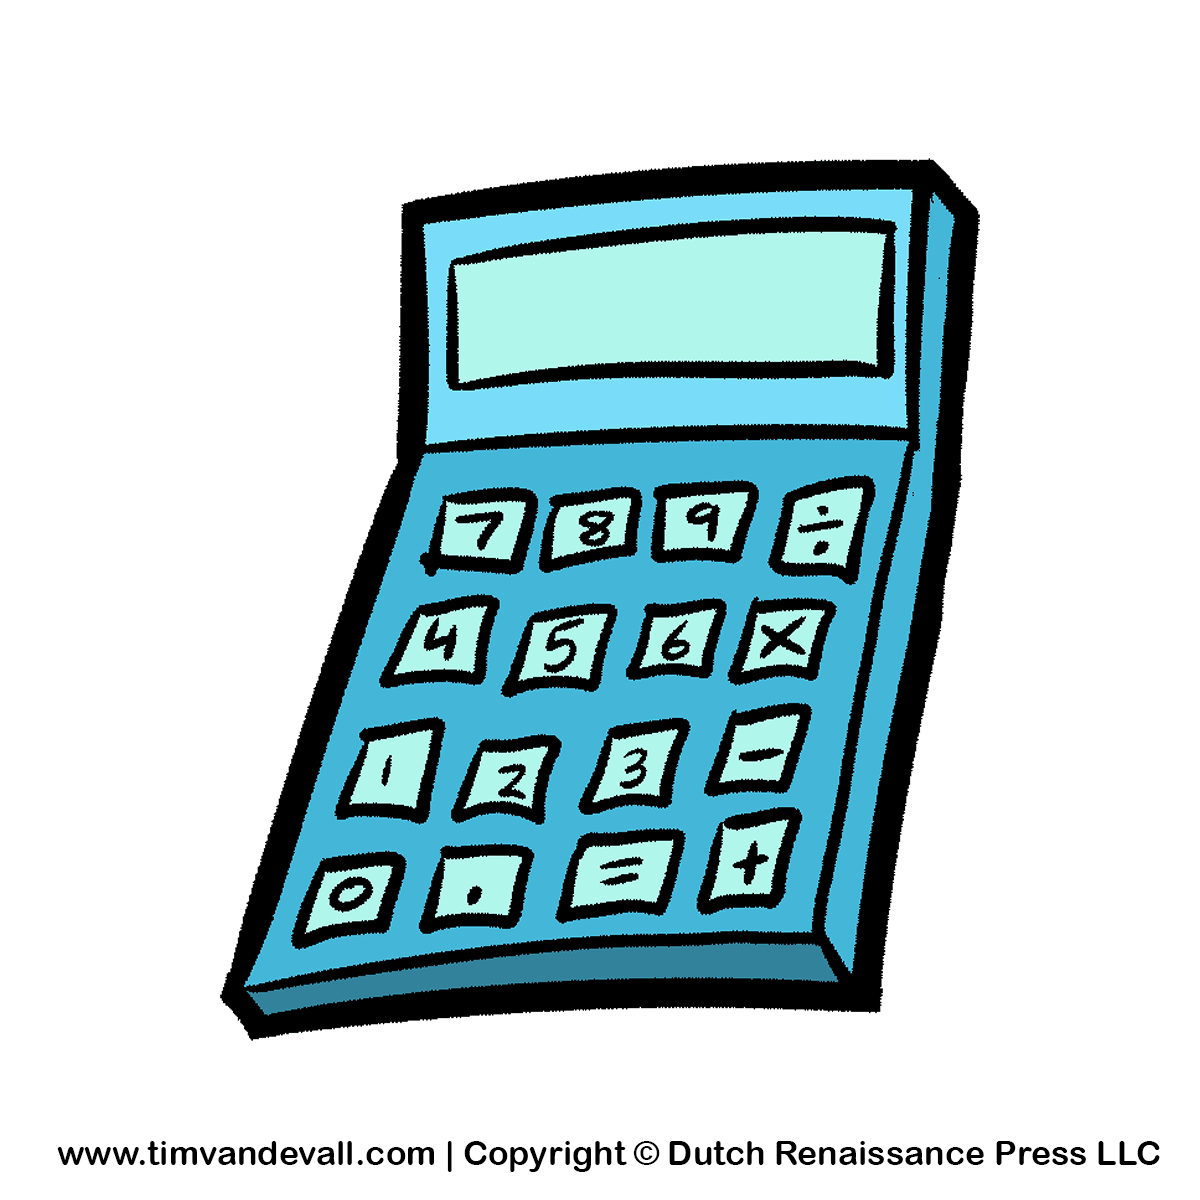 School Calculator